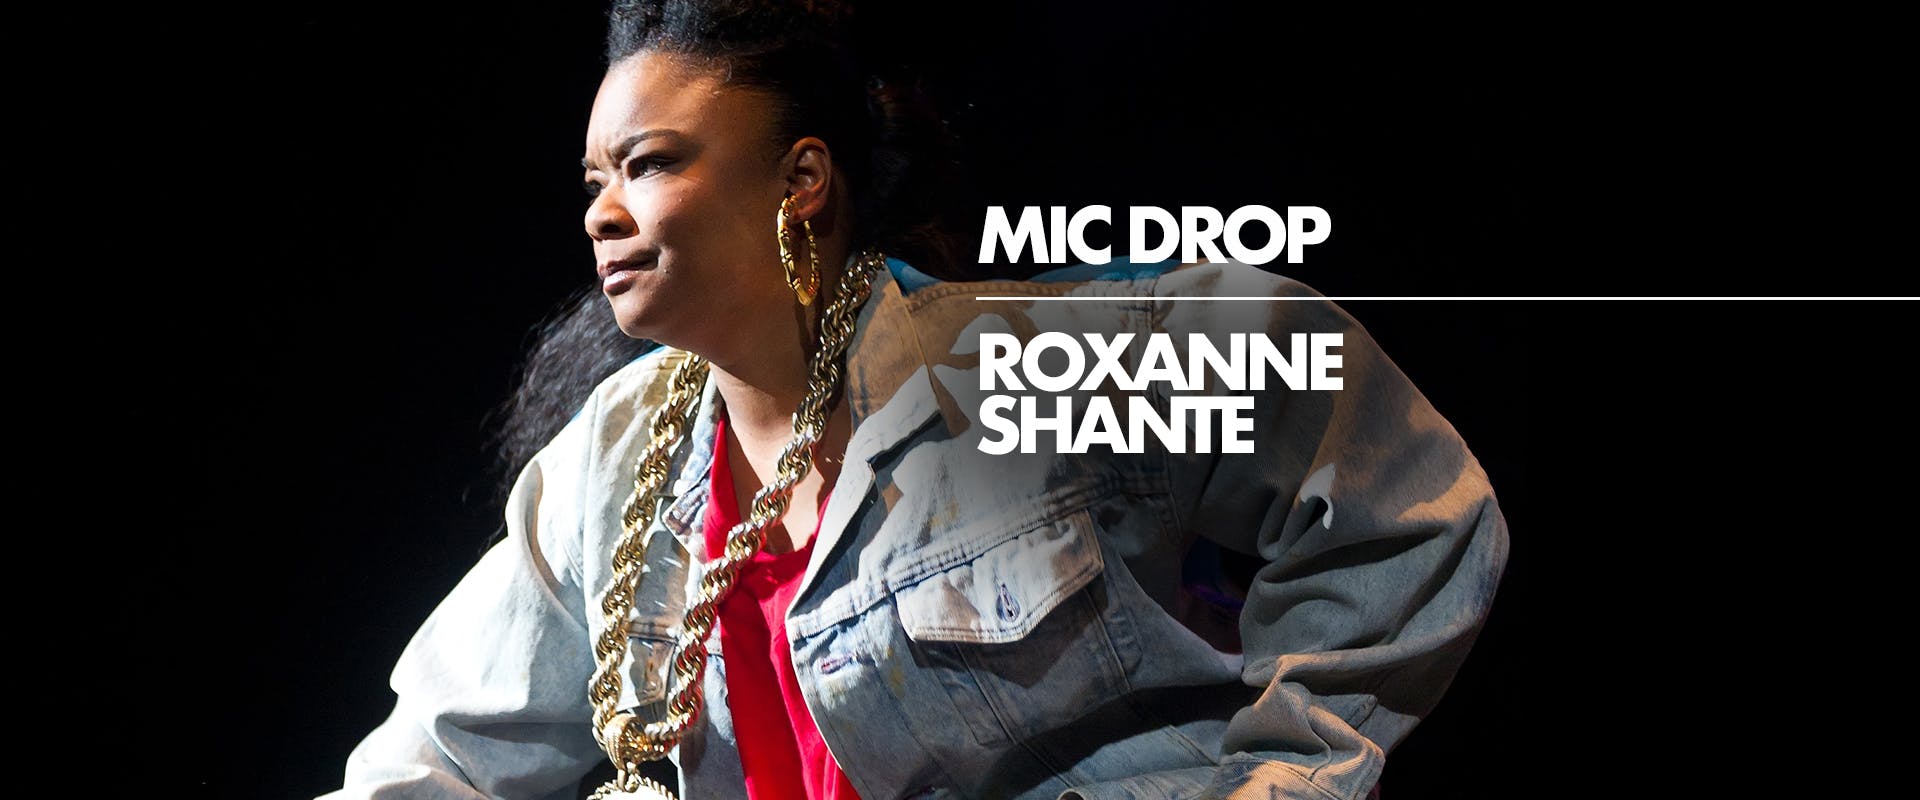 MIC DROP: Roxanne Shante